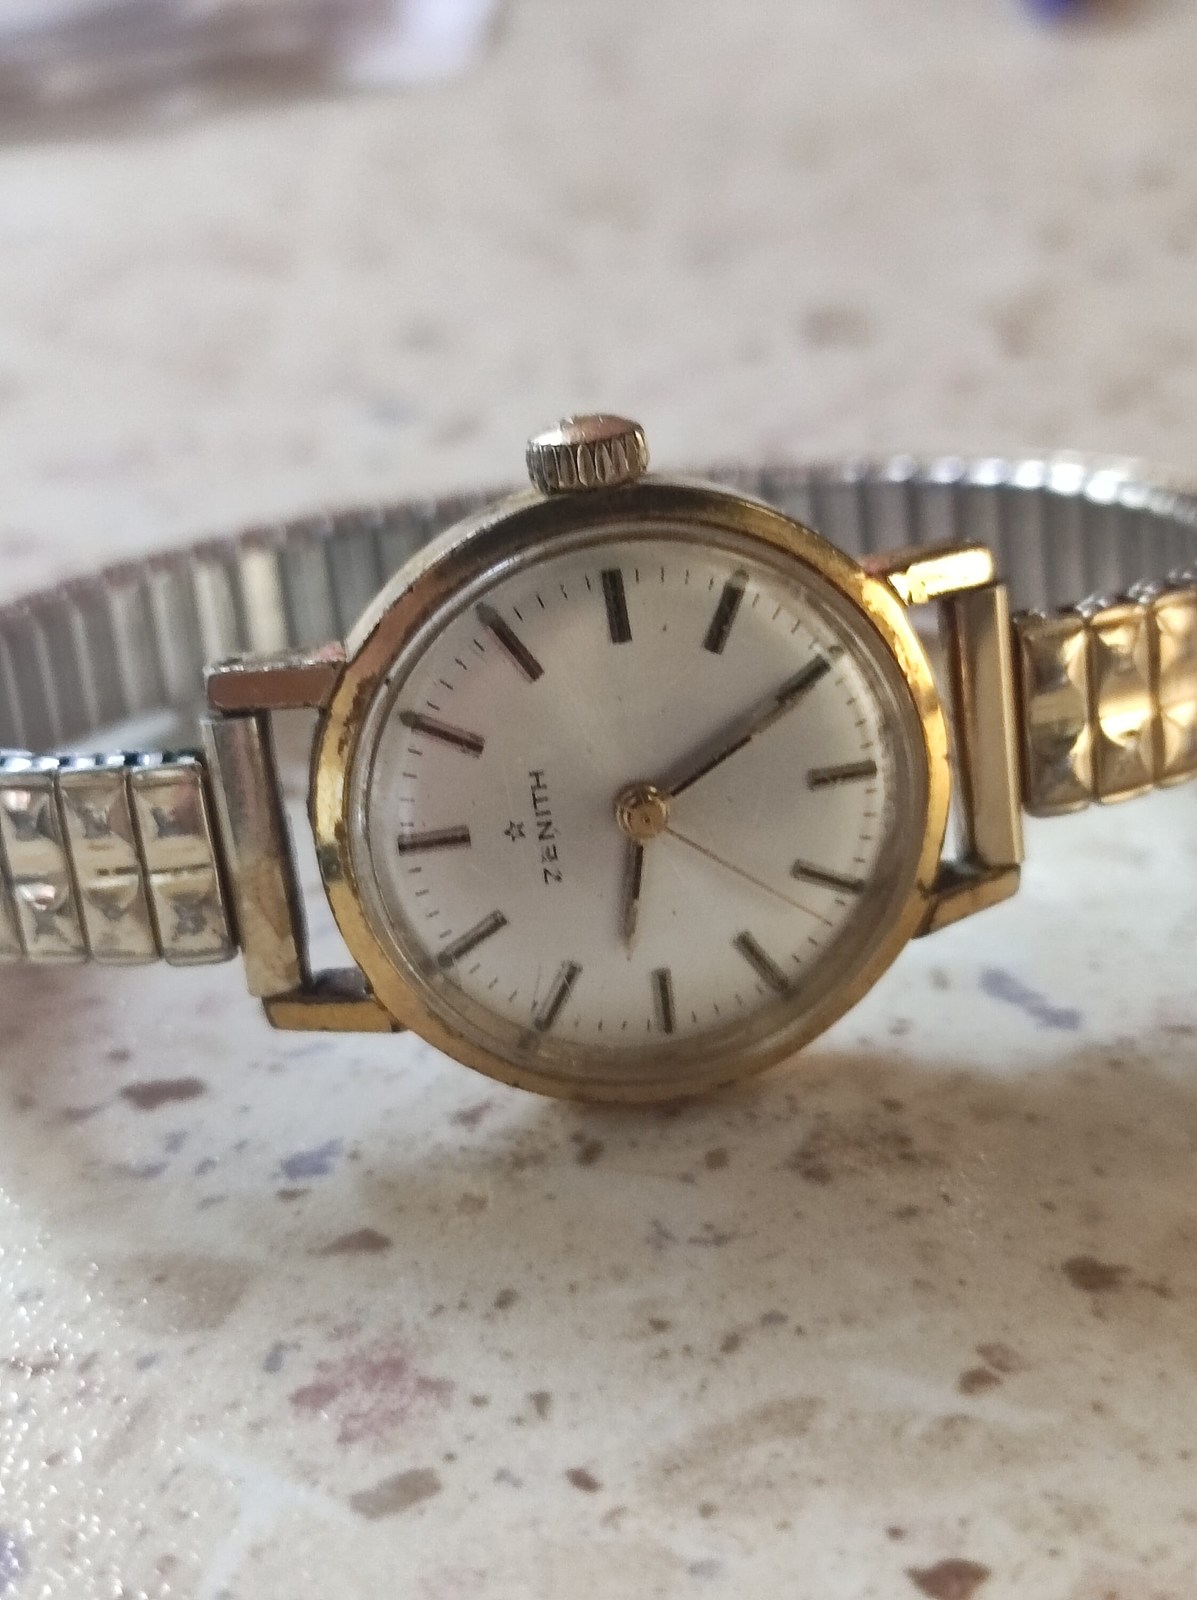 Zenith women wristwatch - $170.00